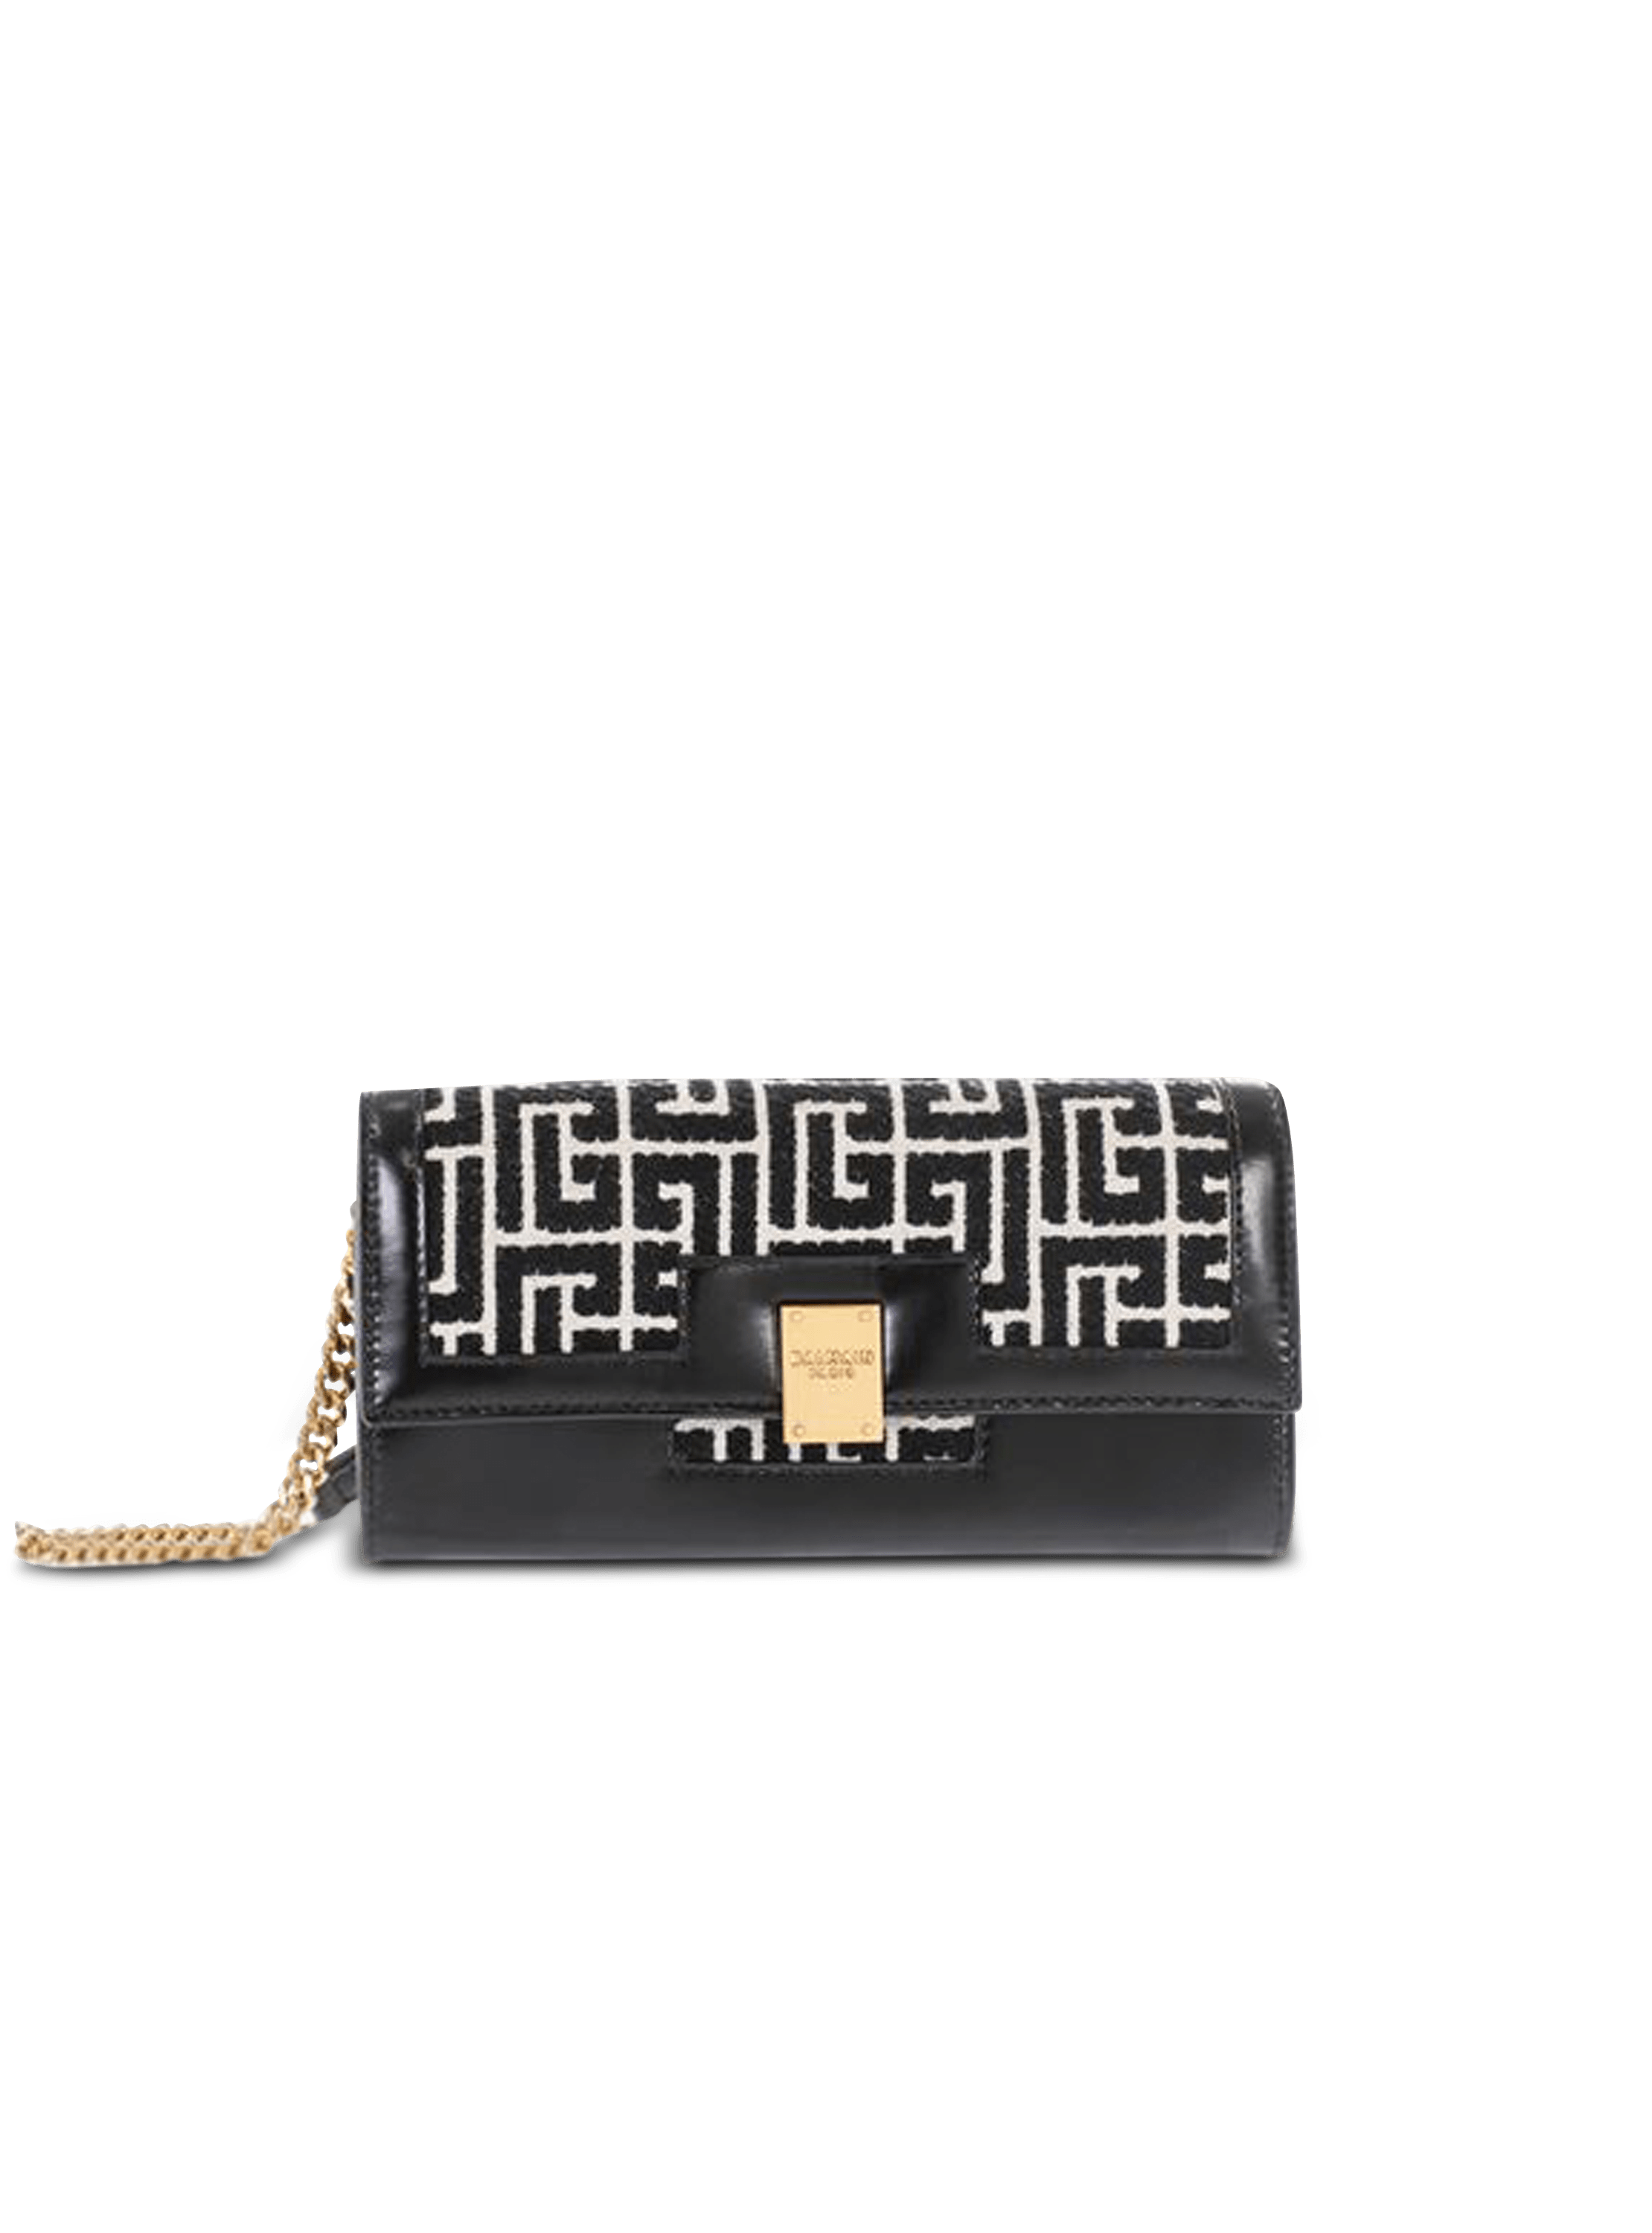 Balmain Handbags, Purses & Wallets for Women